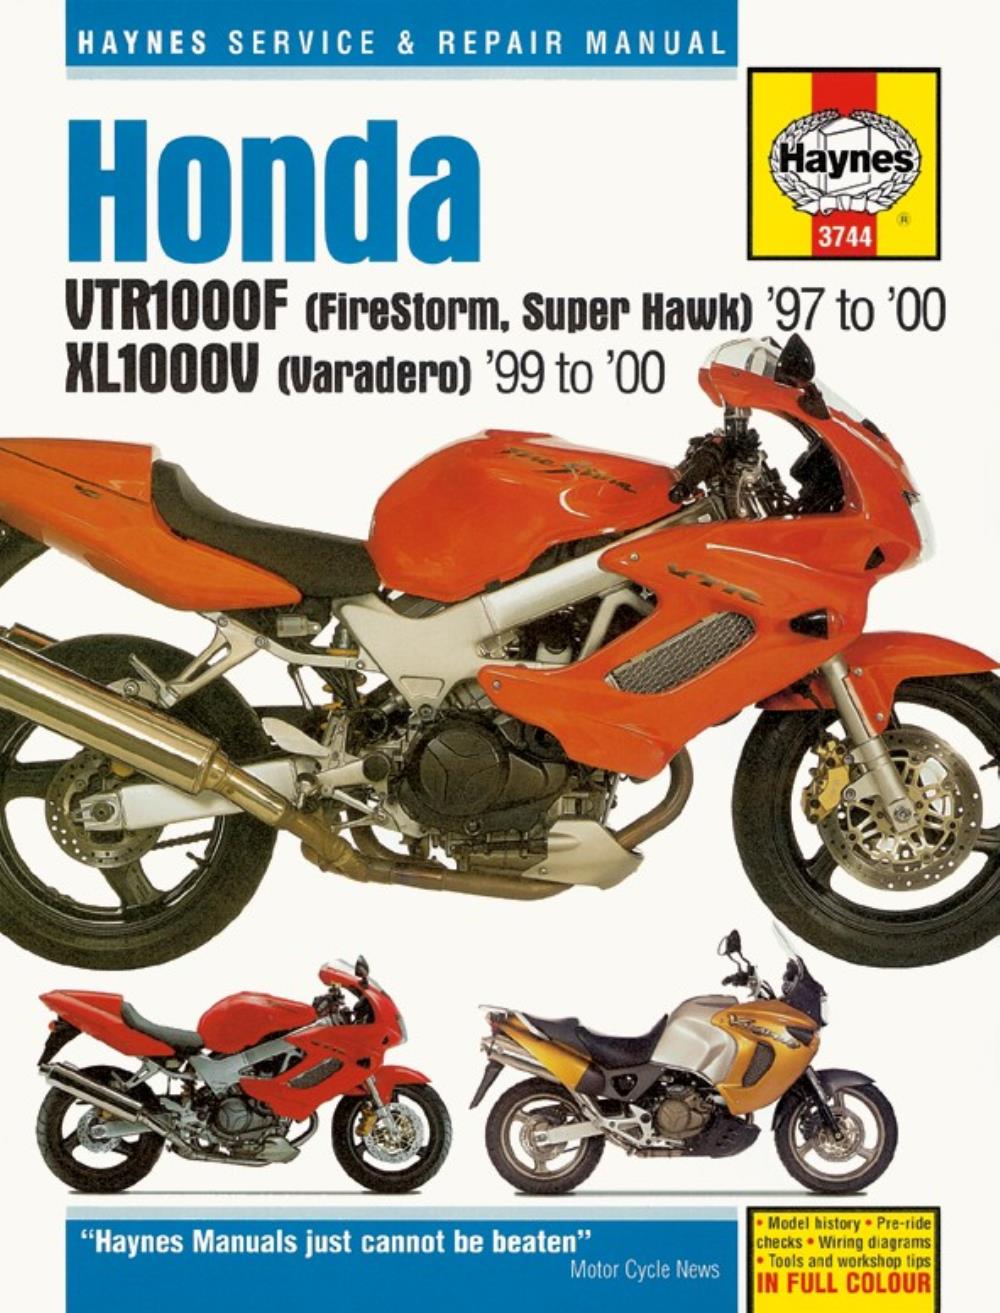 Honda XL 1000 V Varadero 2006 Haynes Service Repair Manual 3744 for sale online 